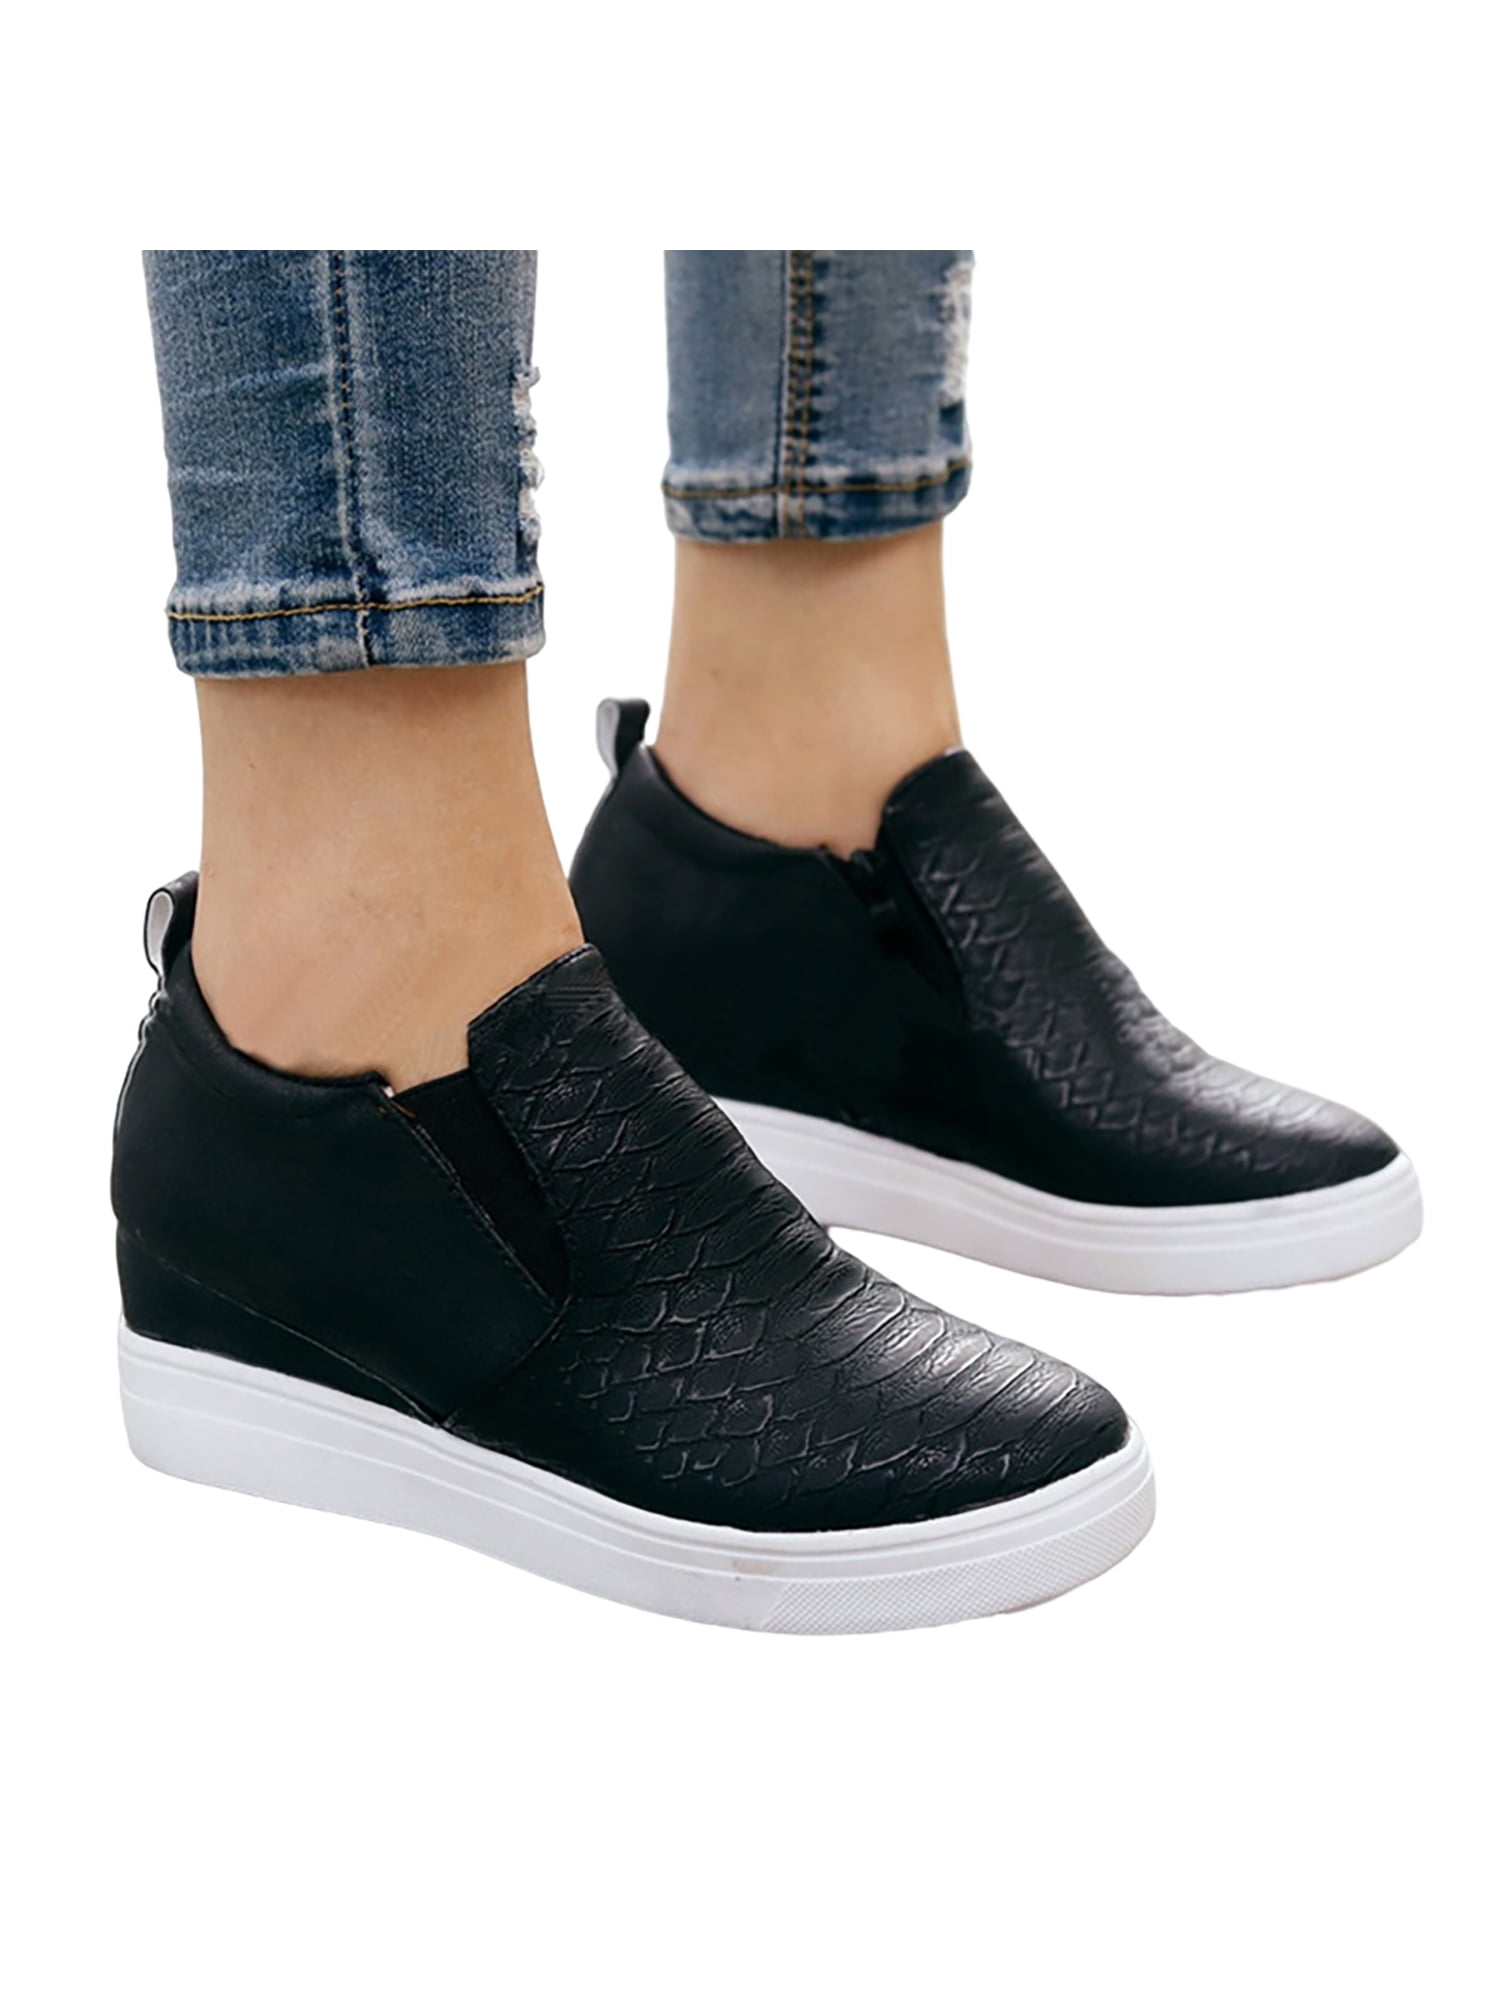 Women High Heels  Platform Hidden Wedge Loafers Sneakers Slip On Casual Shoes 